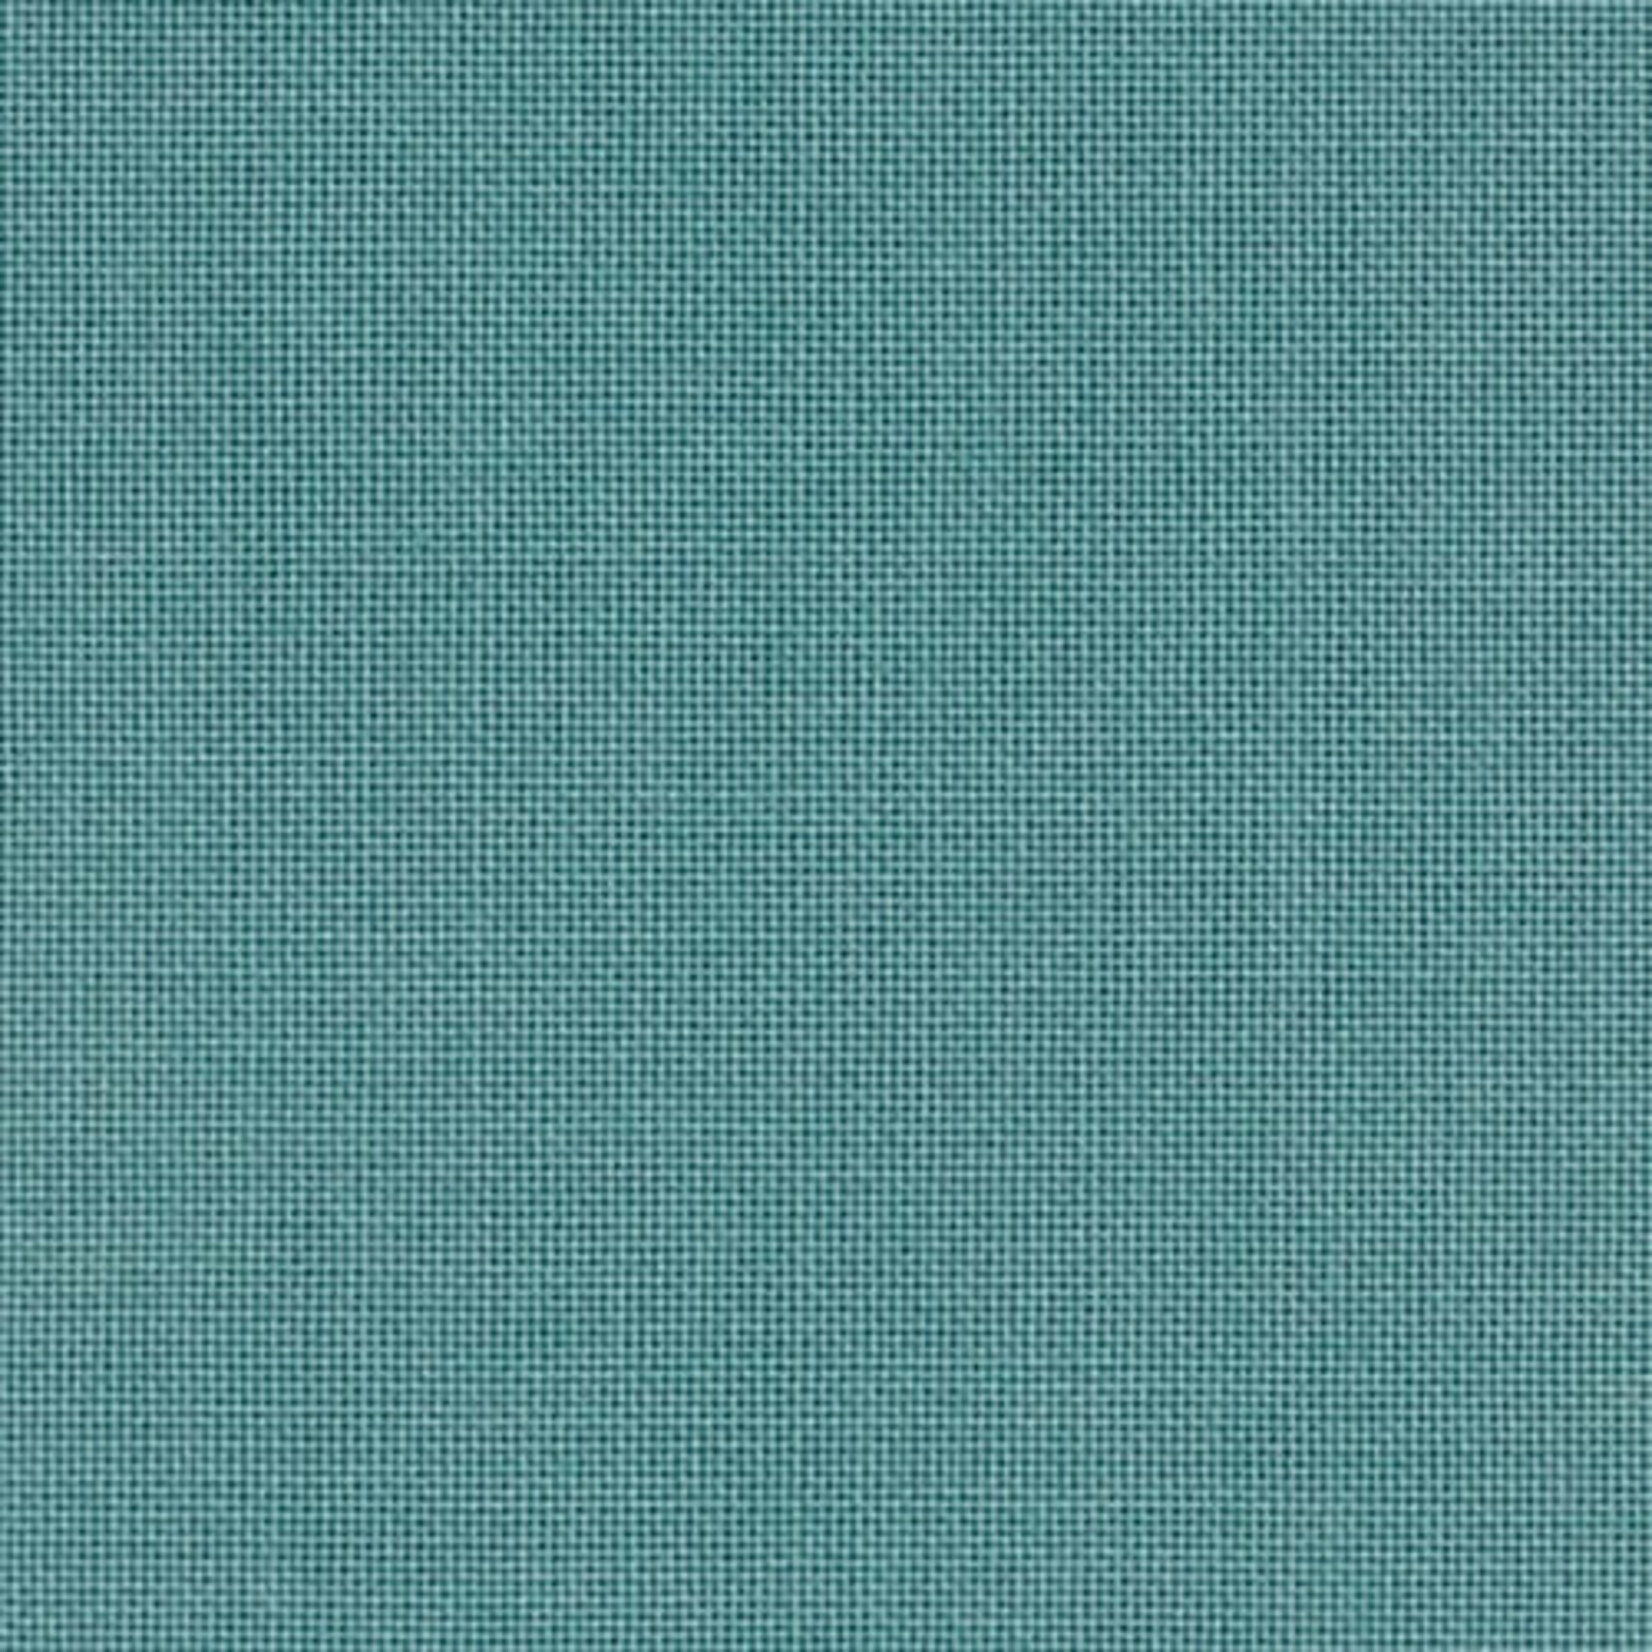 Lineco Bookcloth Turquoise 17X19